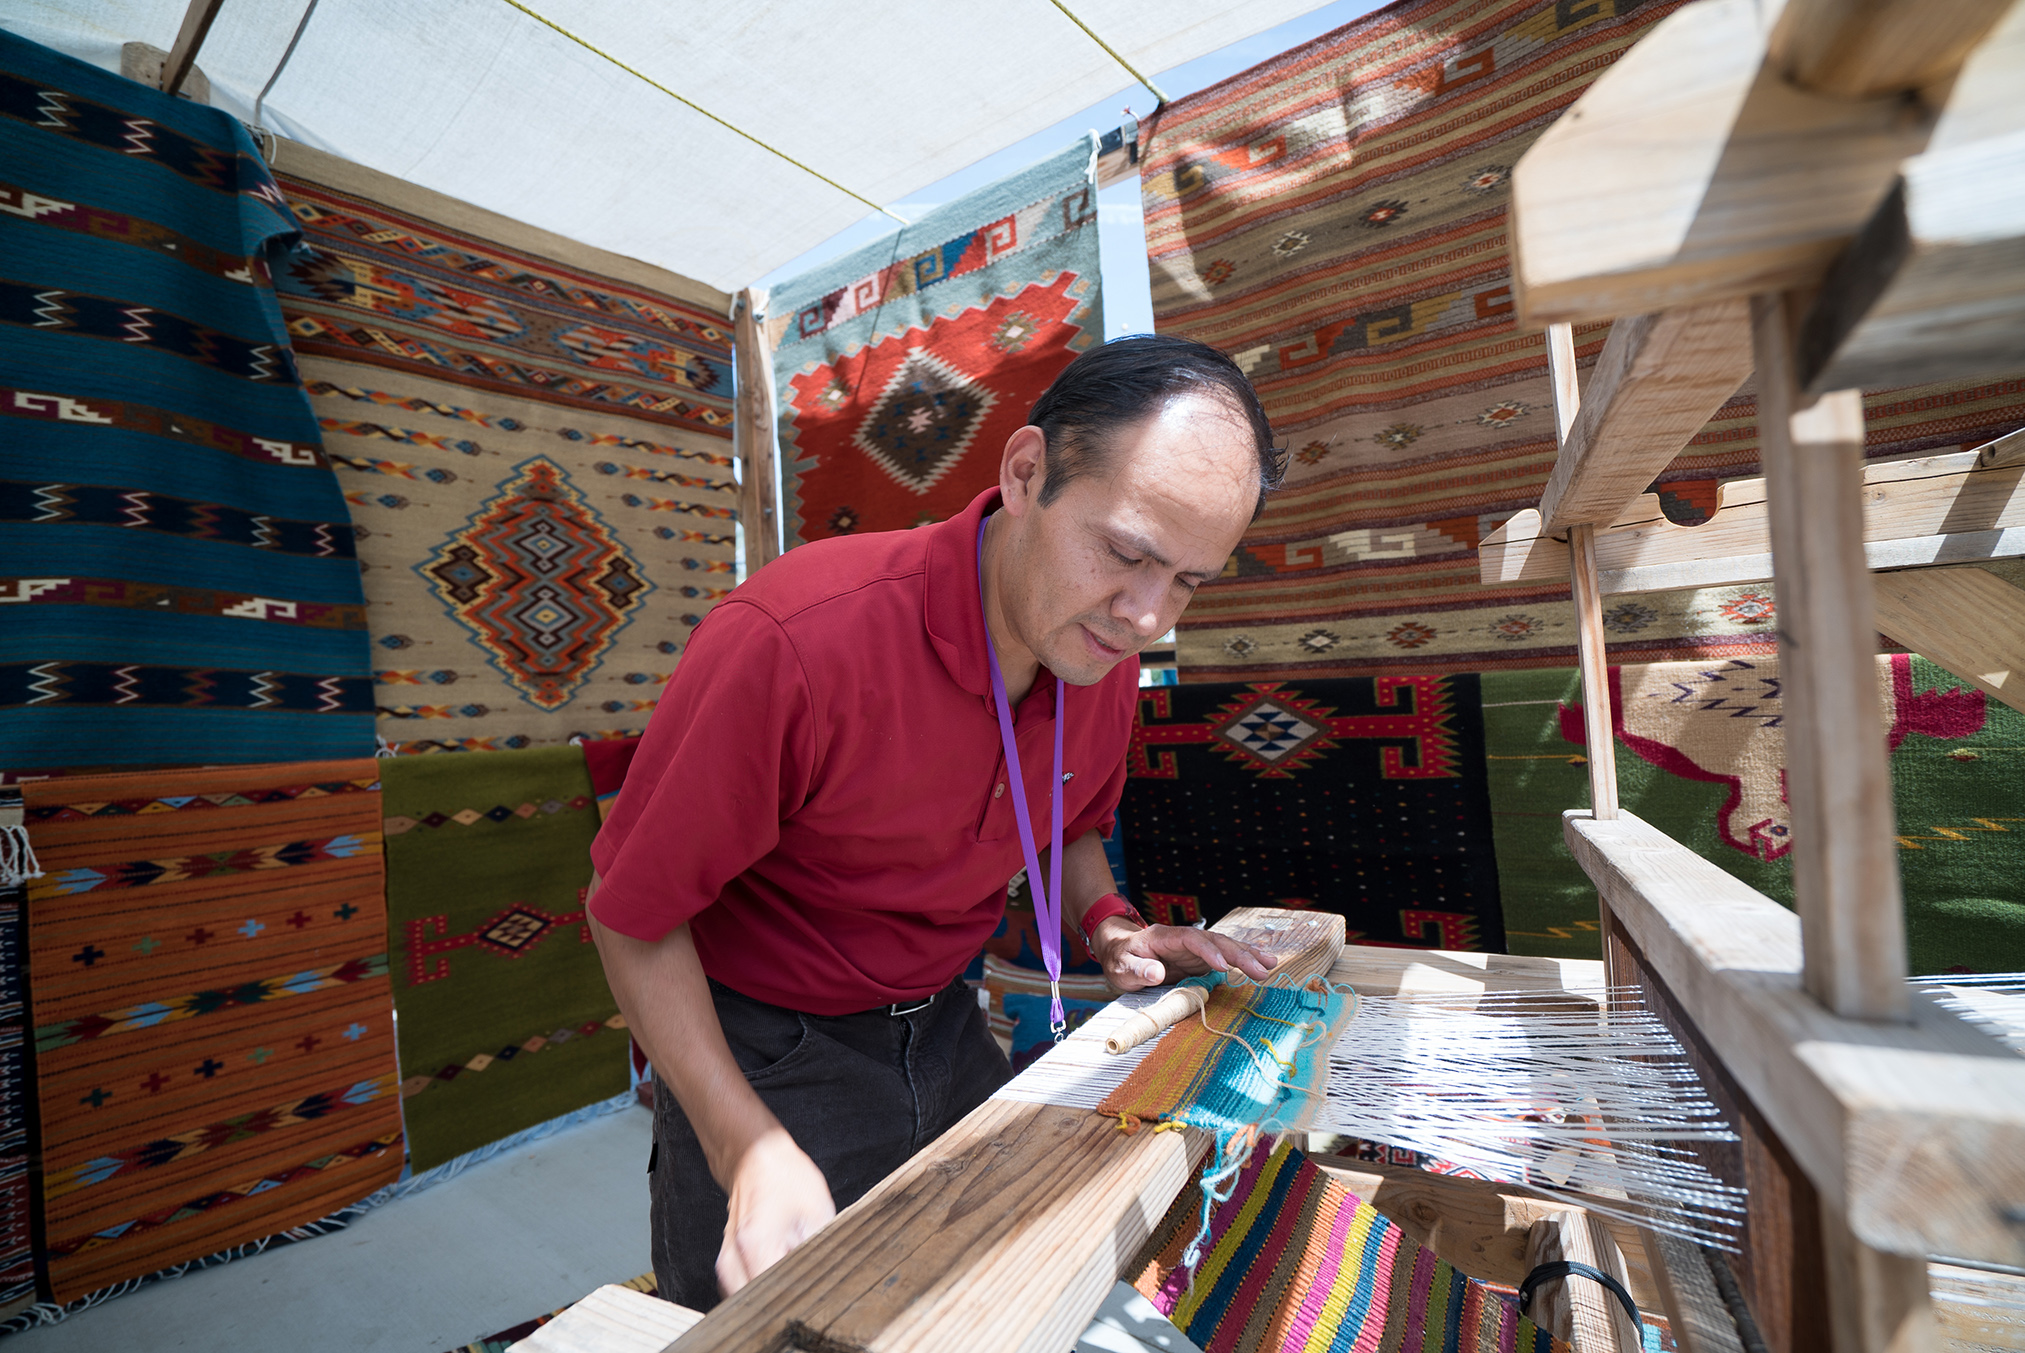 Artist Antonio Mendoza demonstrates the 2000-year Zapotec textile weaving technique.